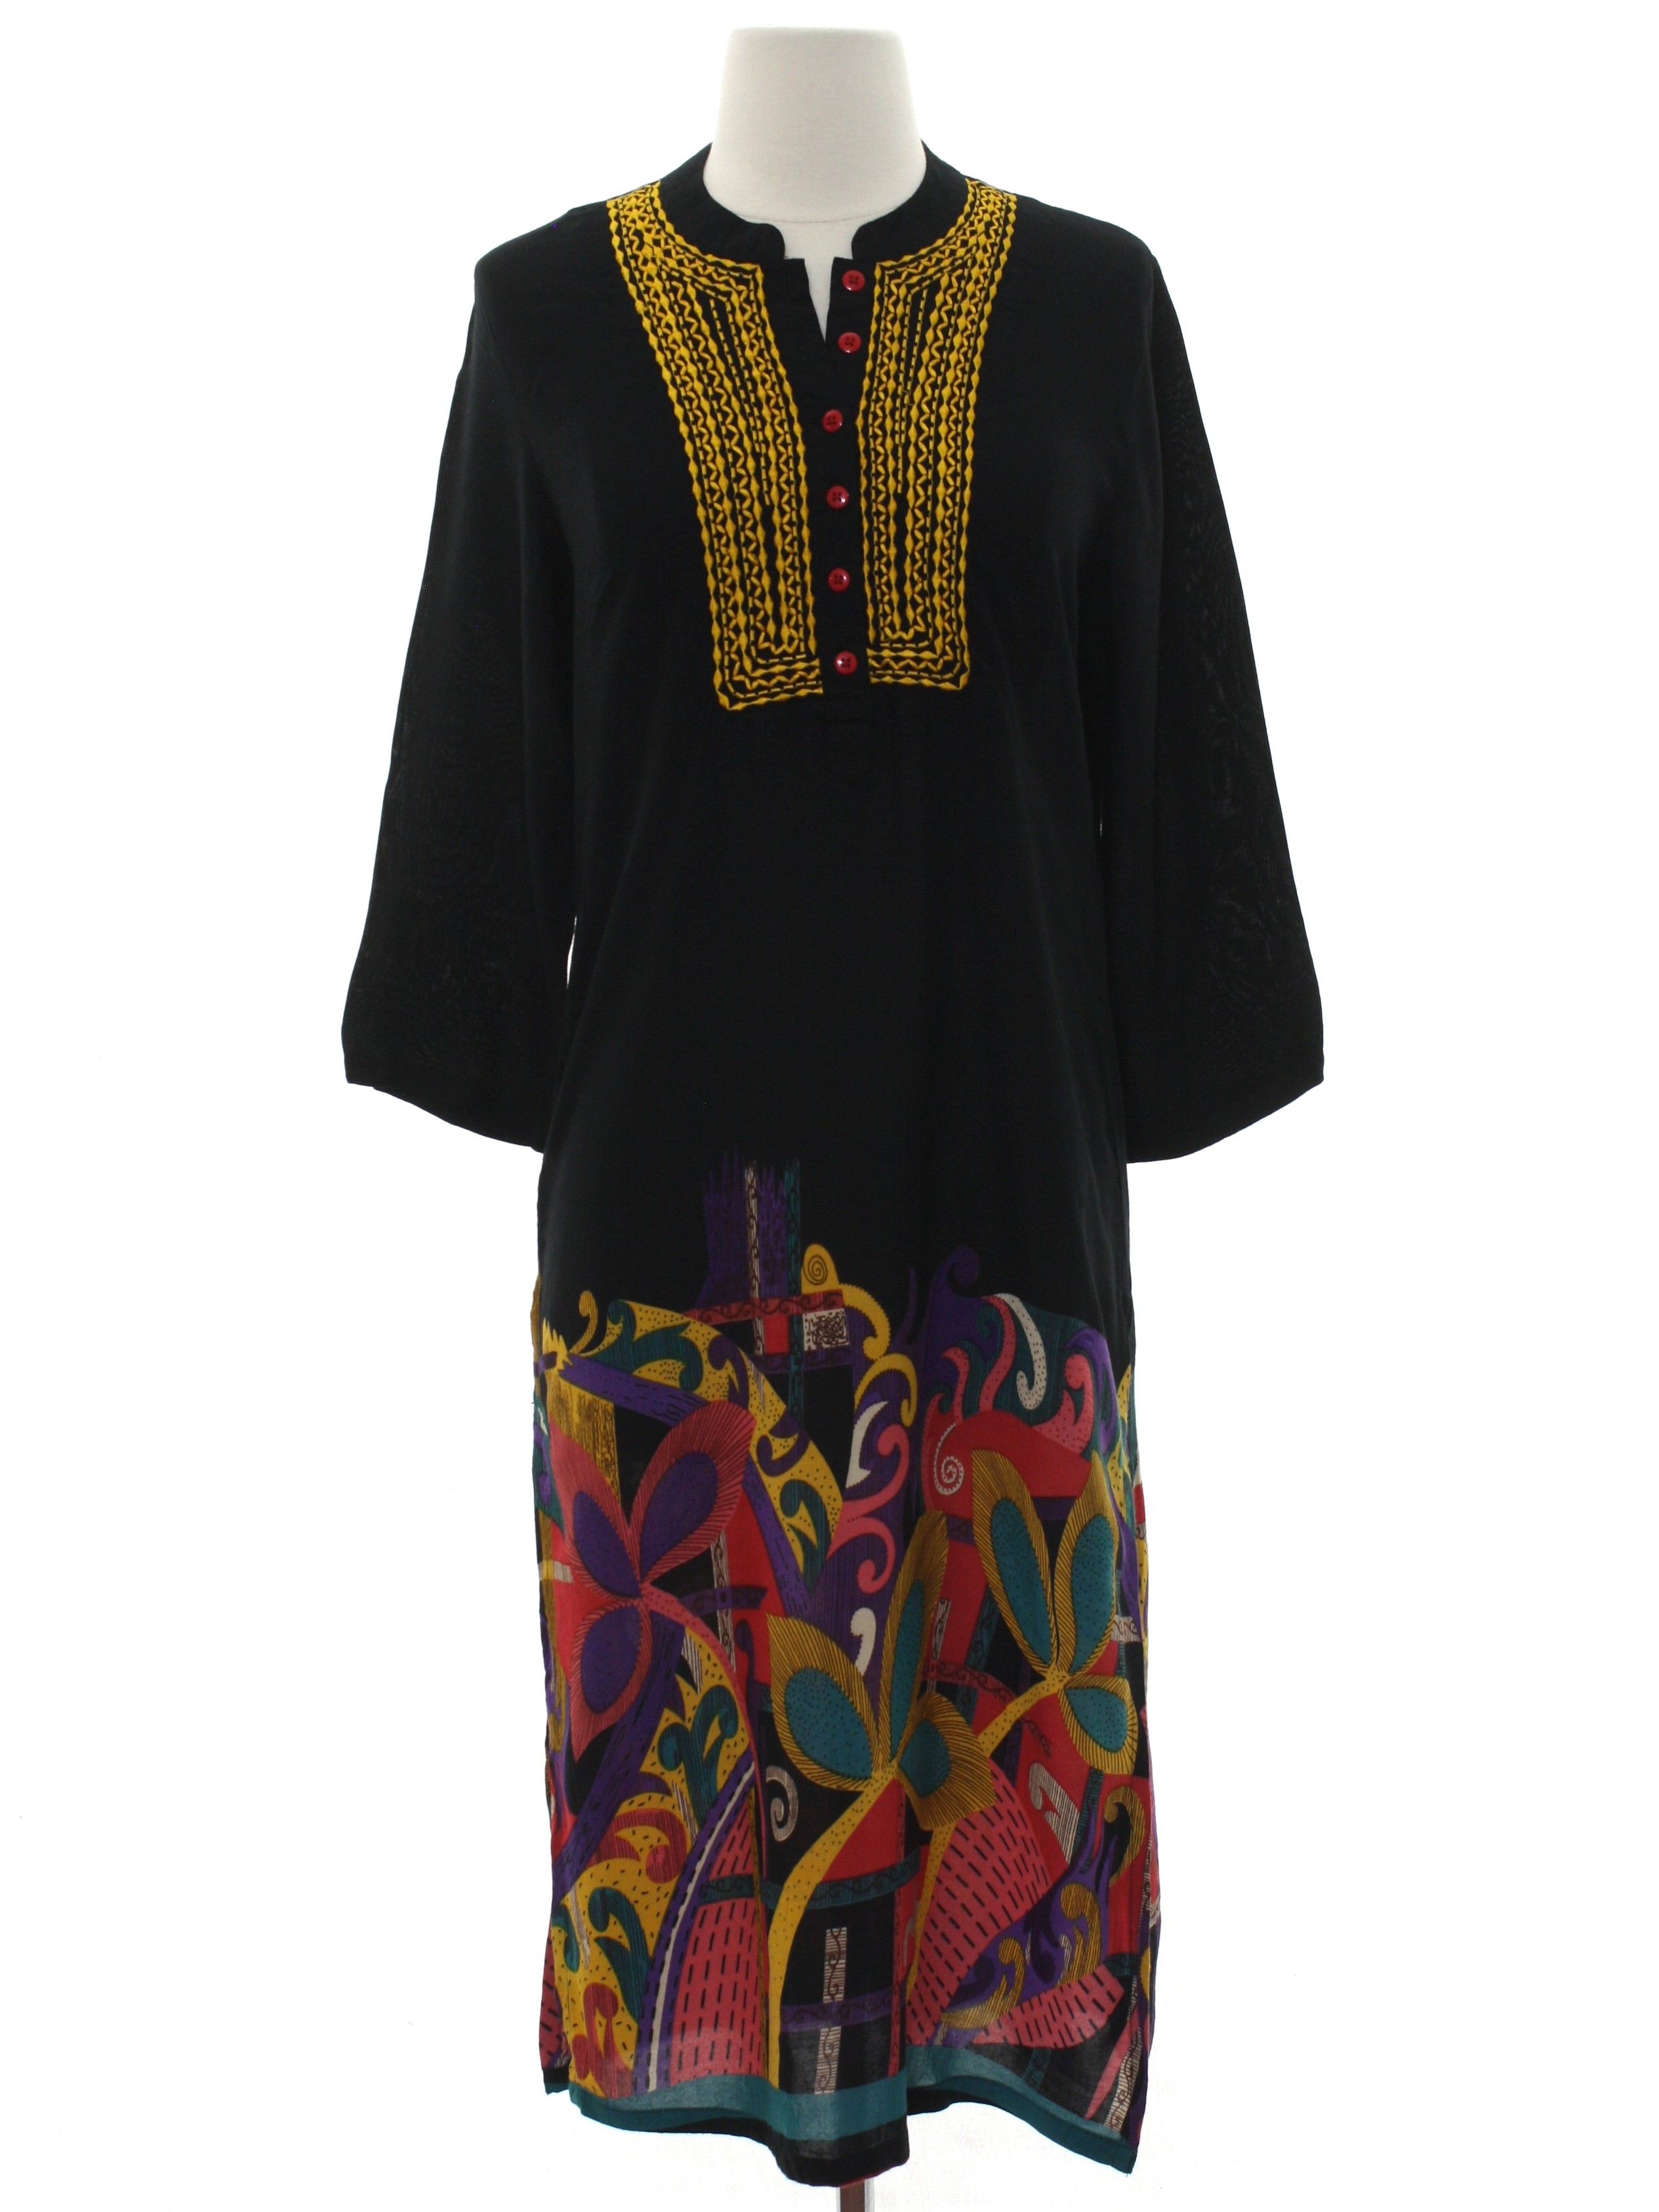 Retro Nineties Hippie Dress: 90s -Medium- Womens black background rayon ...